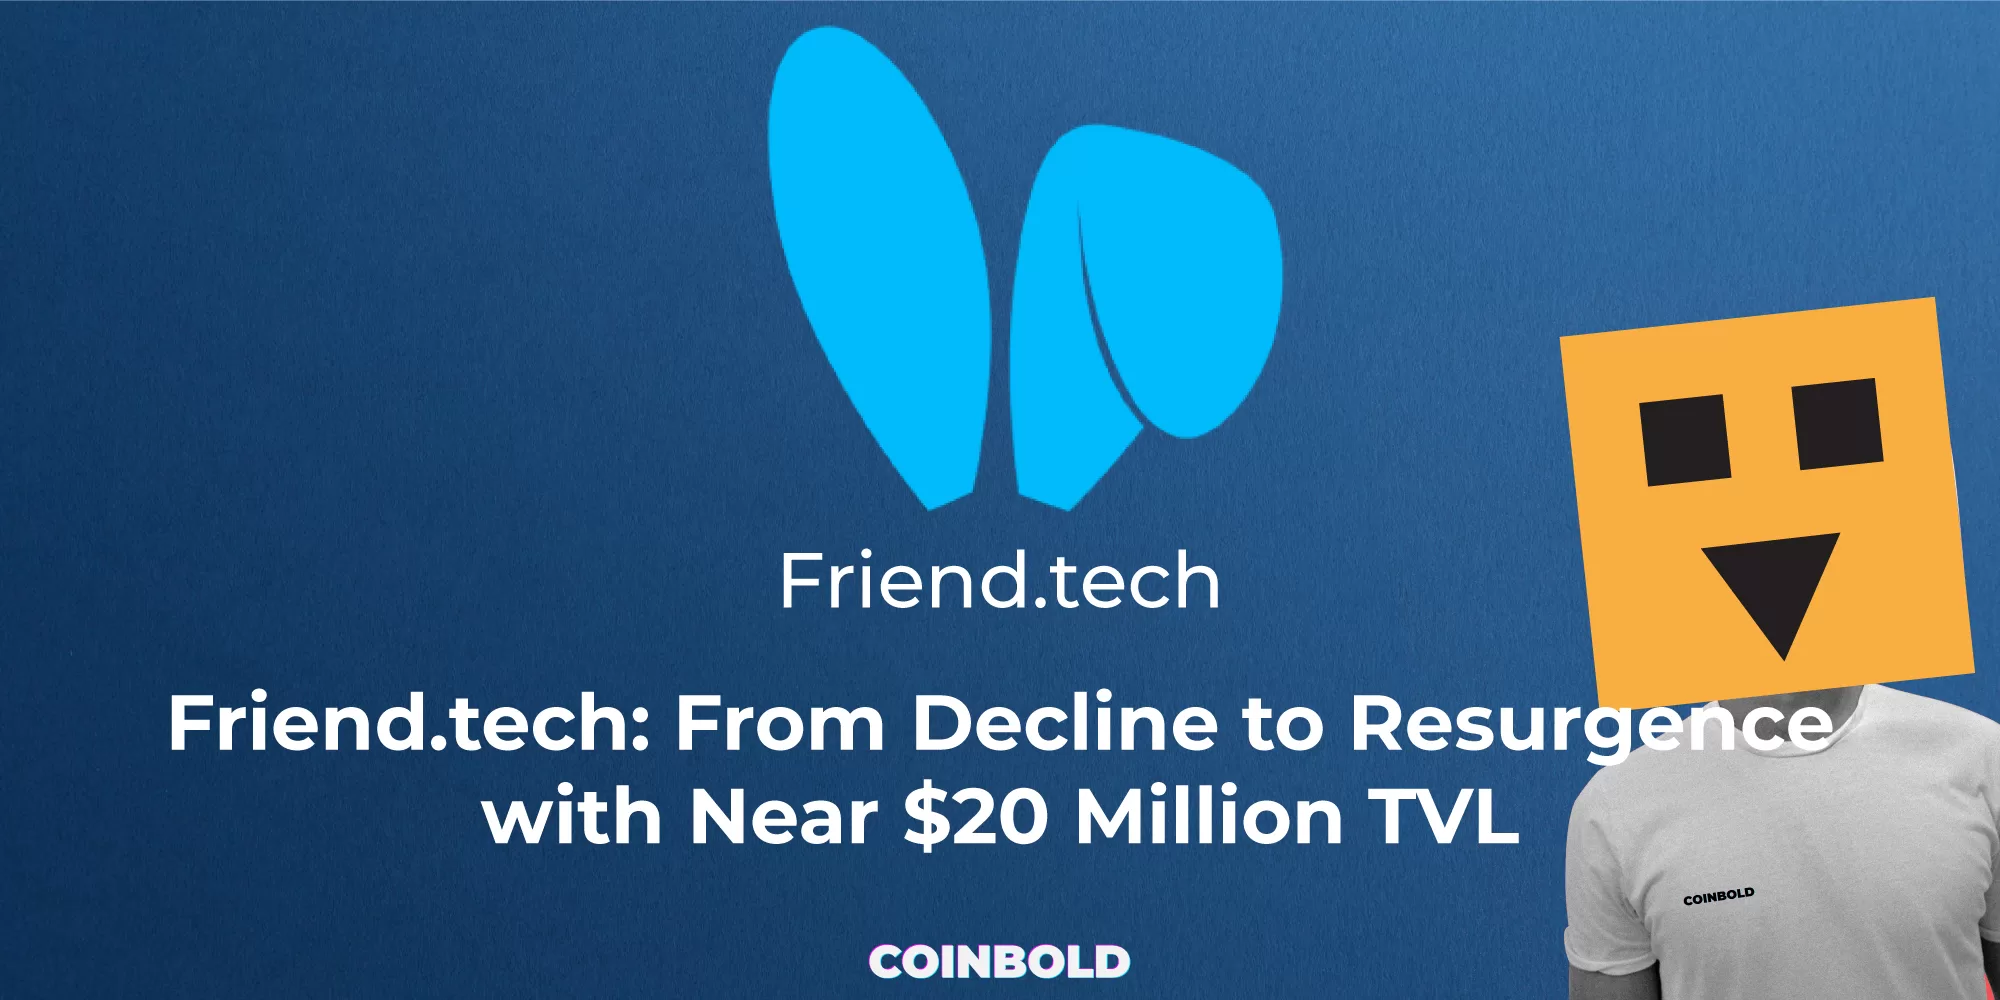 Friend.tech From Decline to Resurgence with Near $20 Million TVL